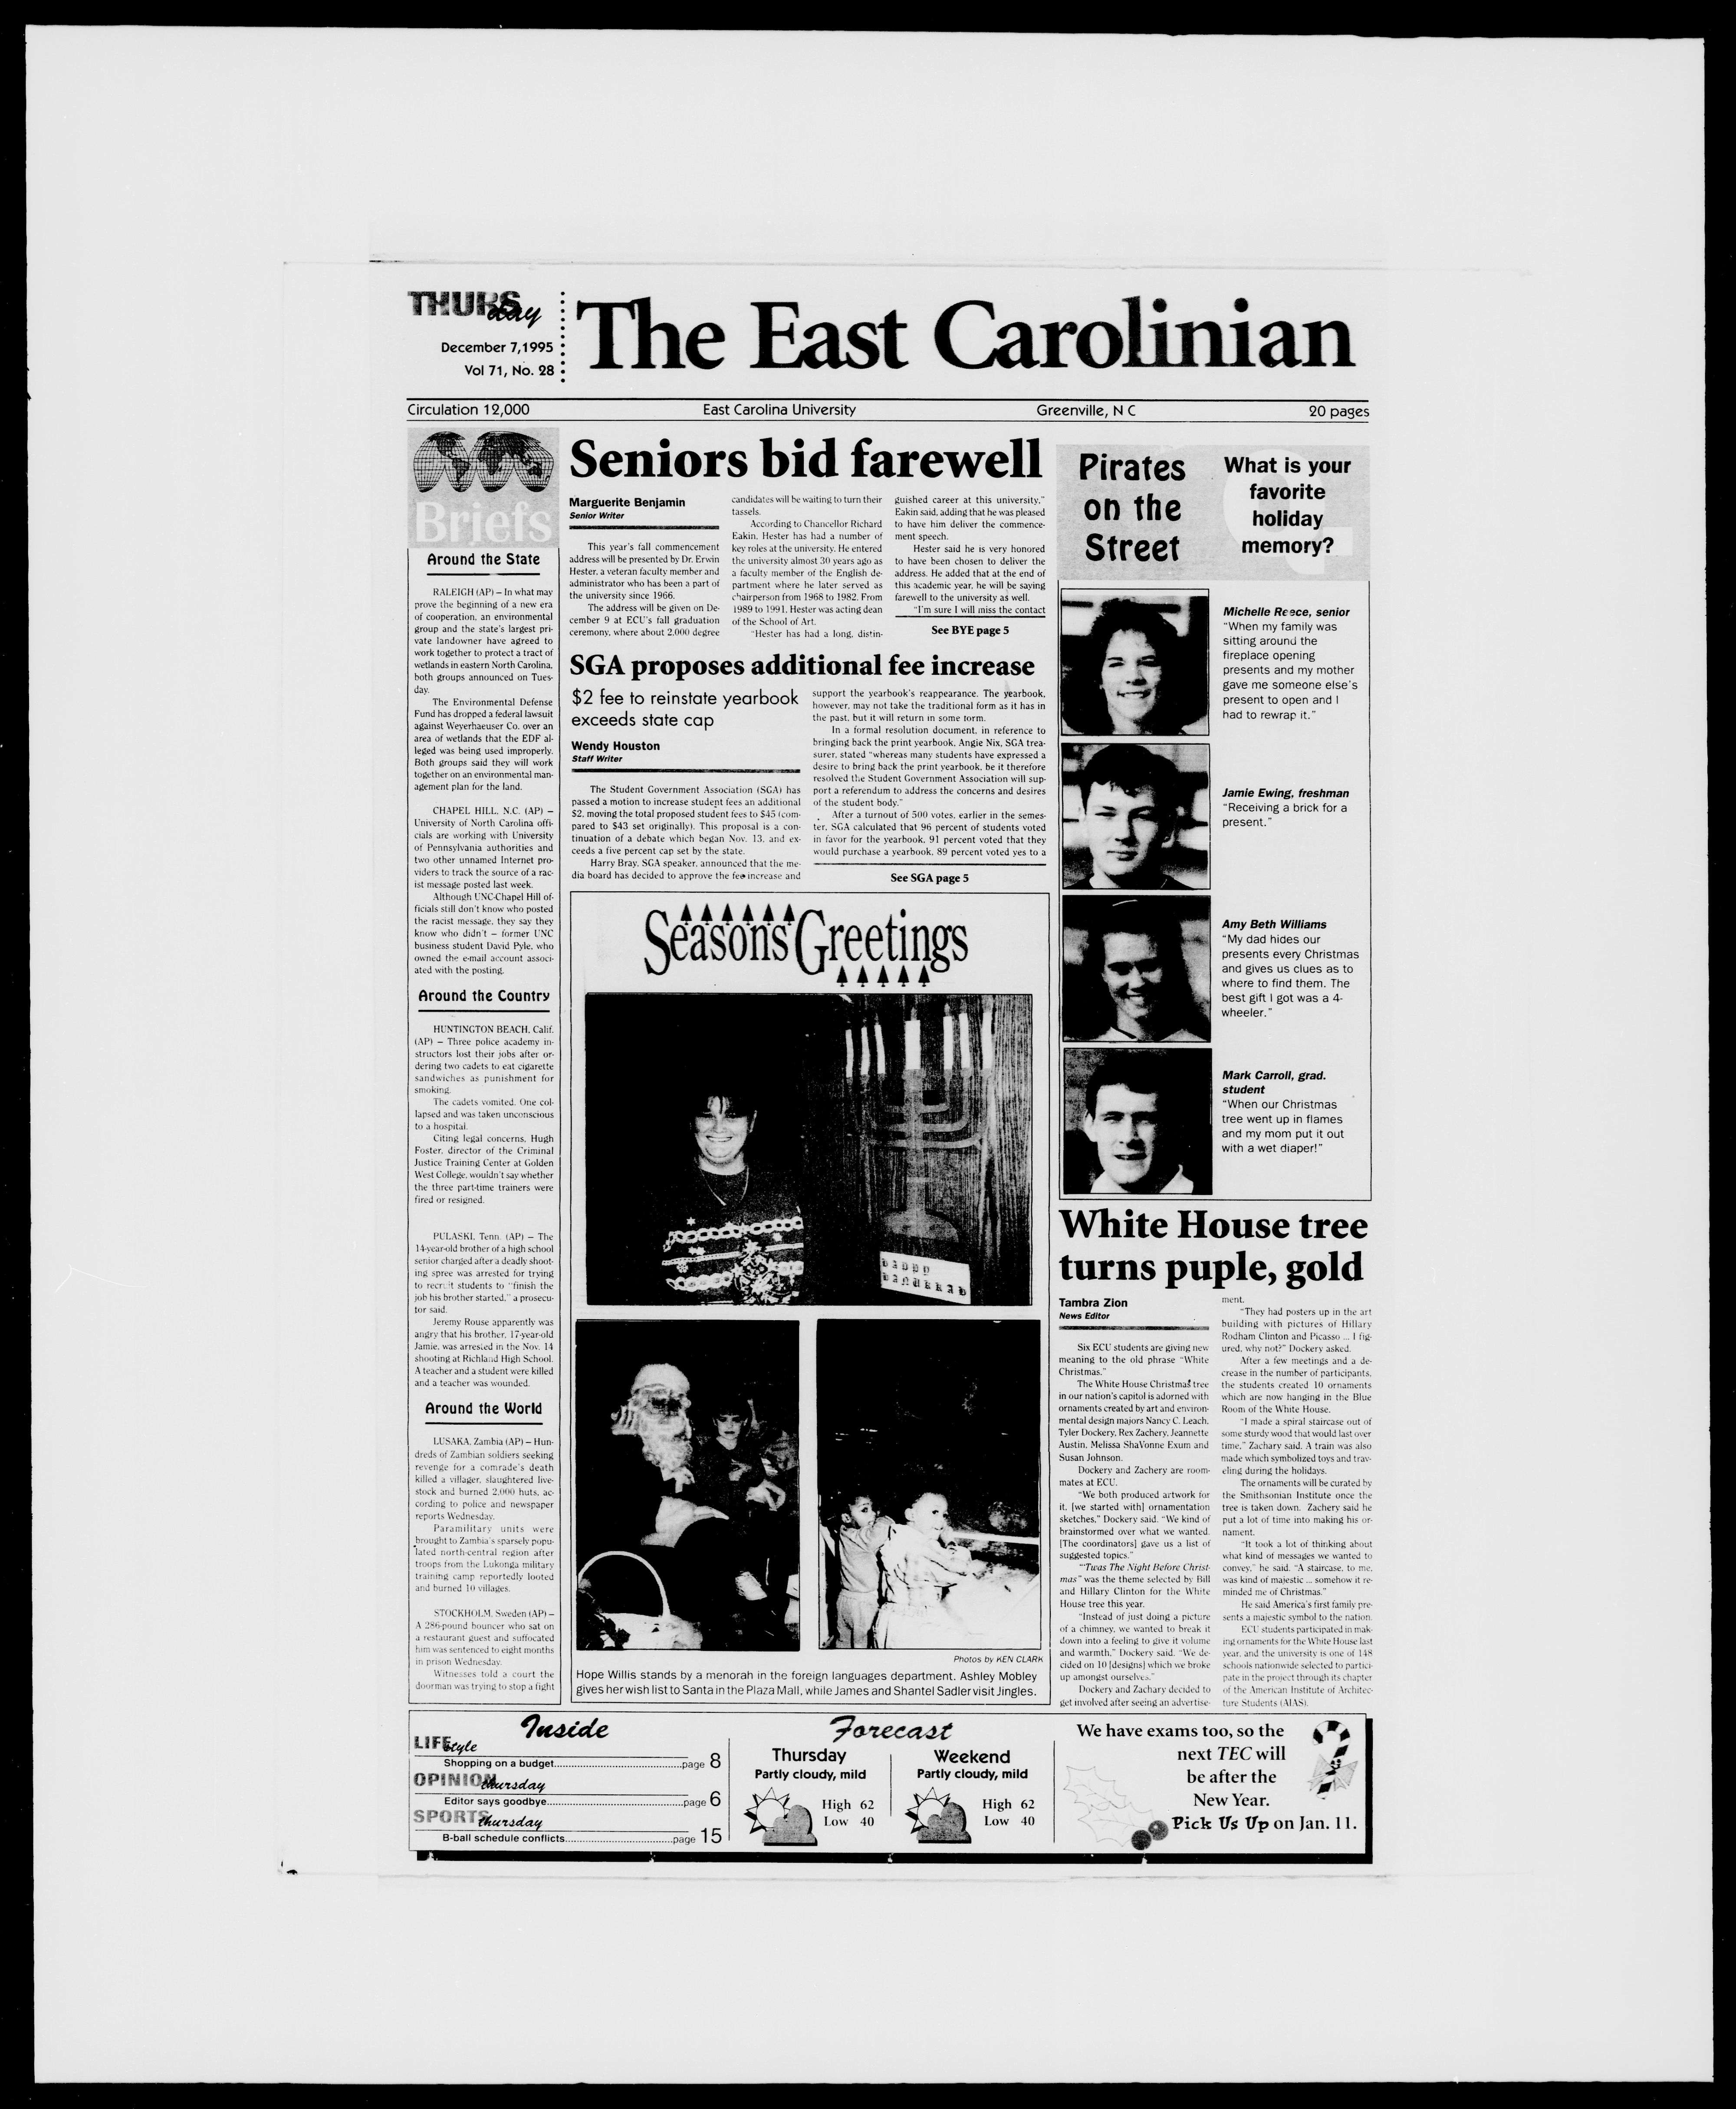 The East Carolinian, December 7, 1995 photo